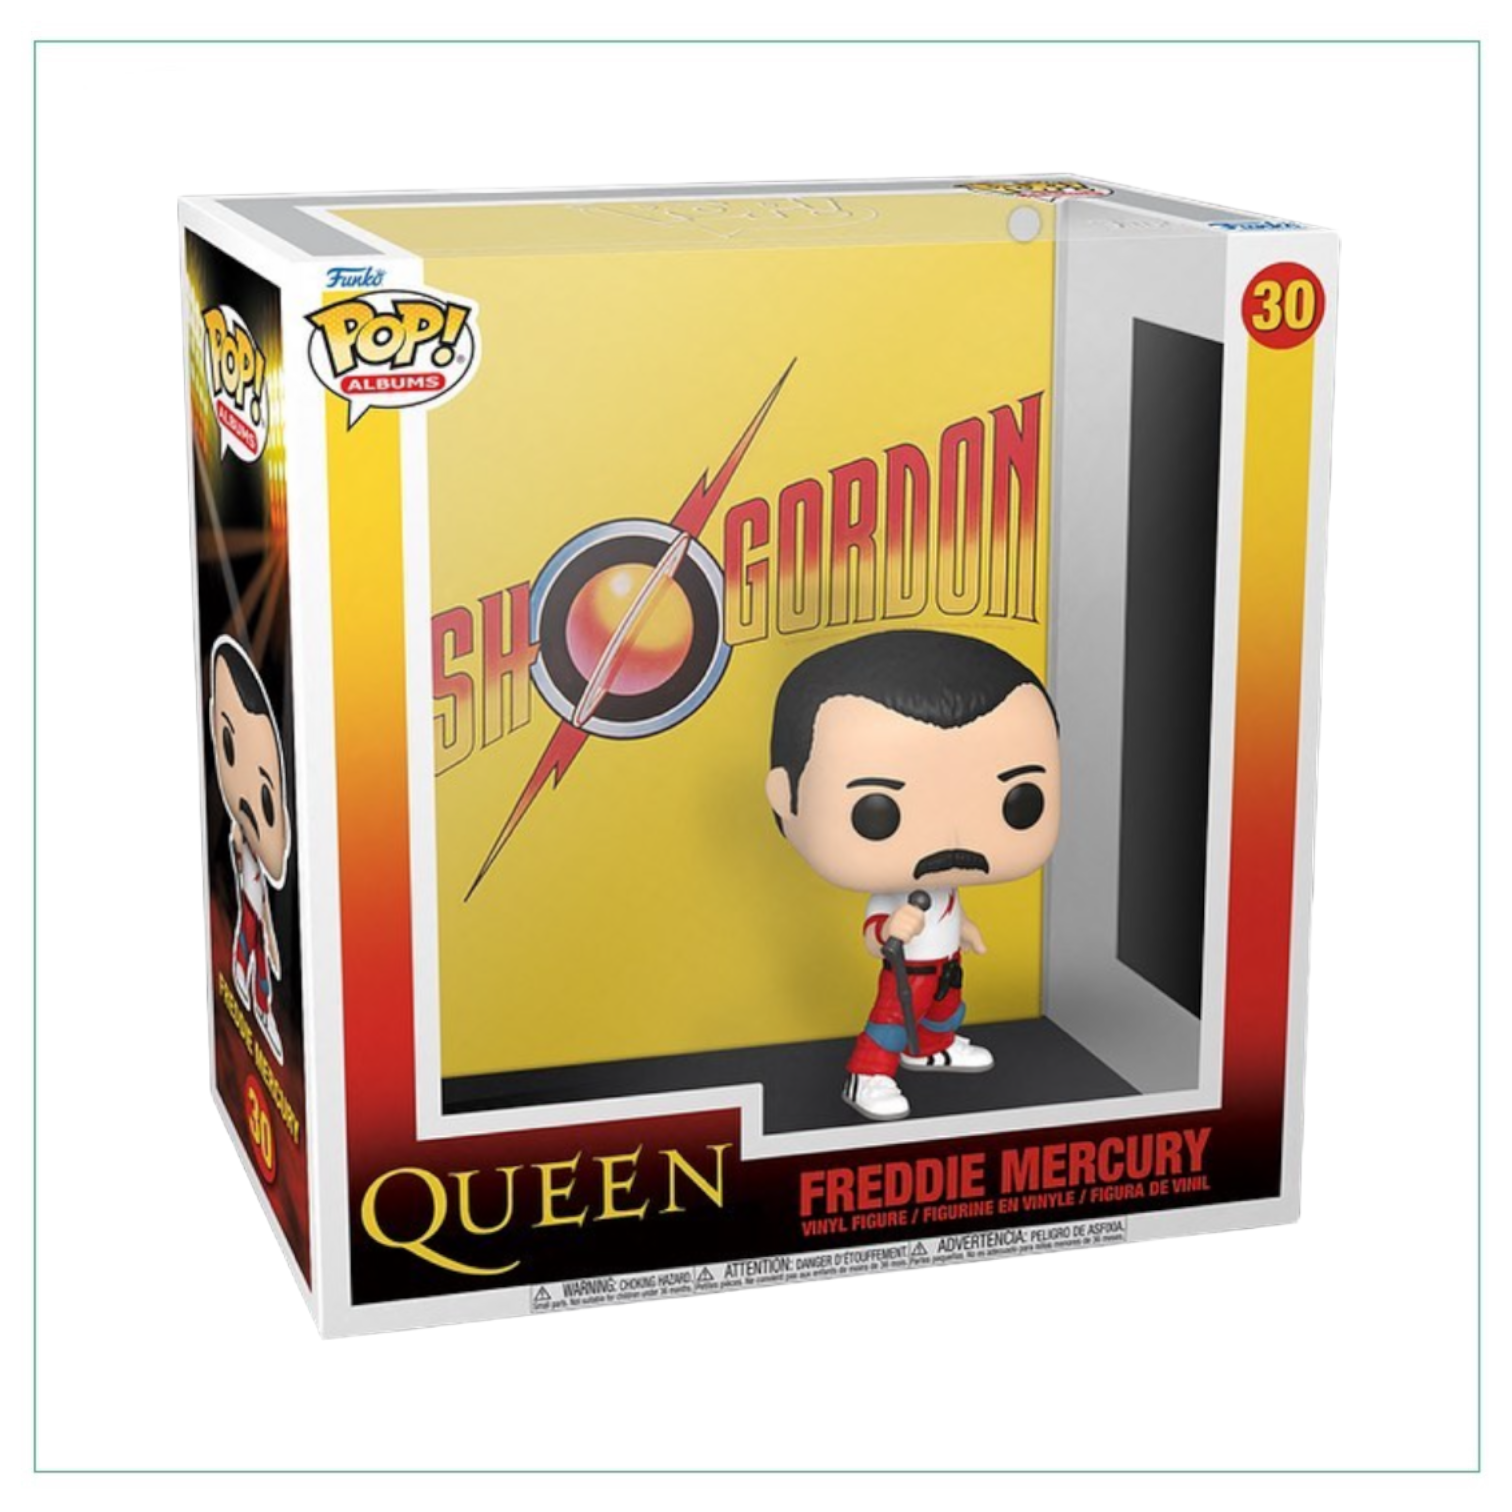 Freddie Mercury Flash Gordon #30 Funko Pop! Album Queen